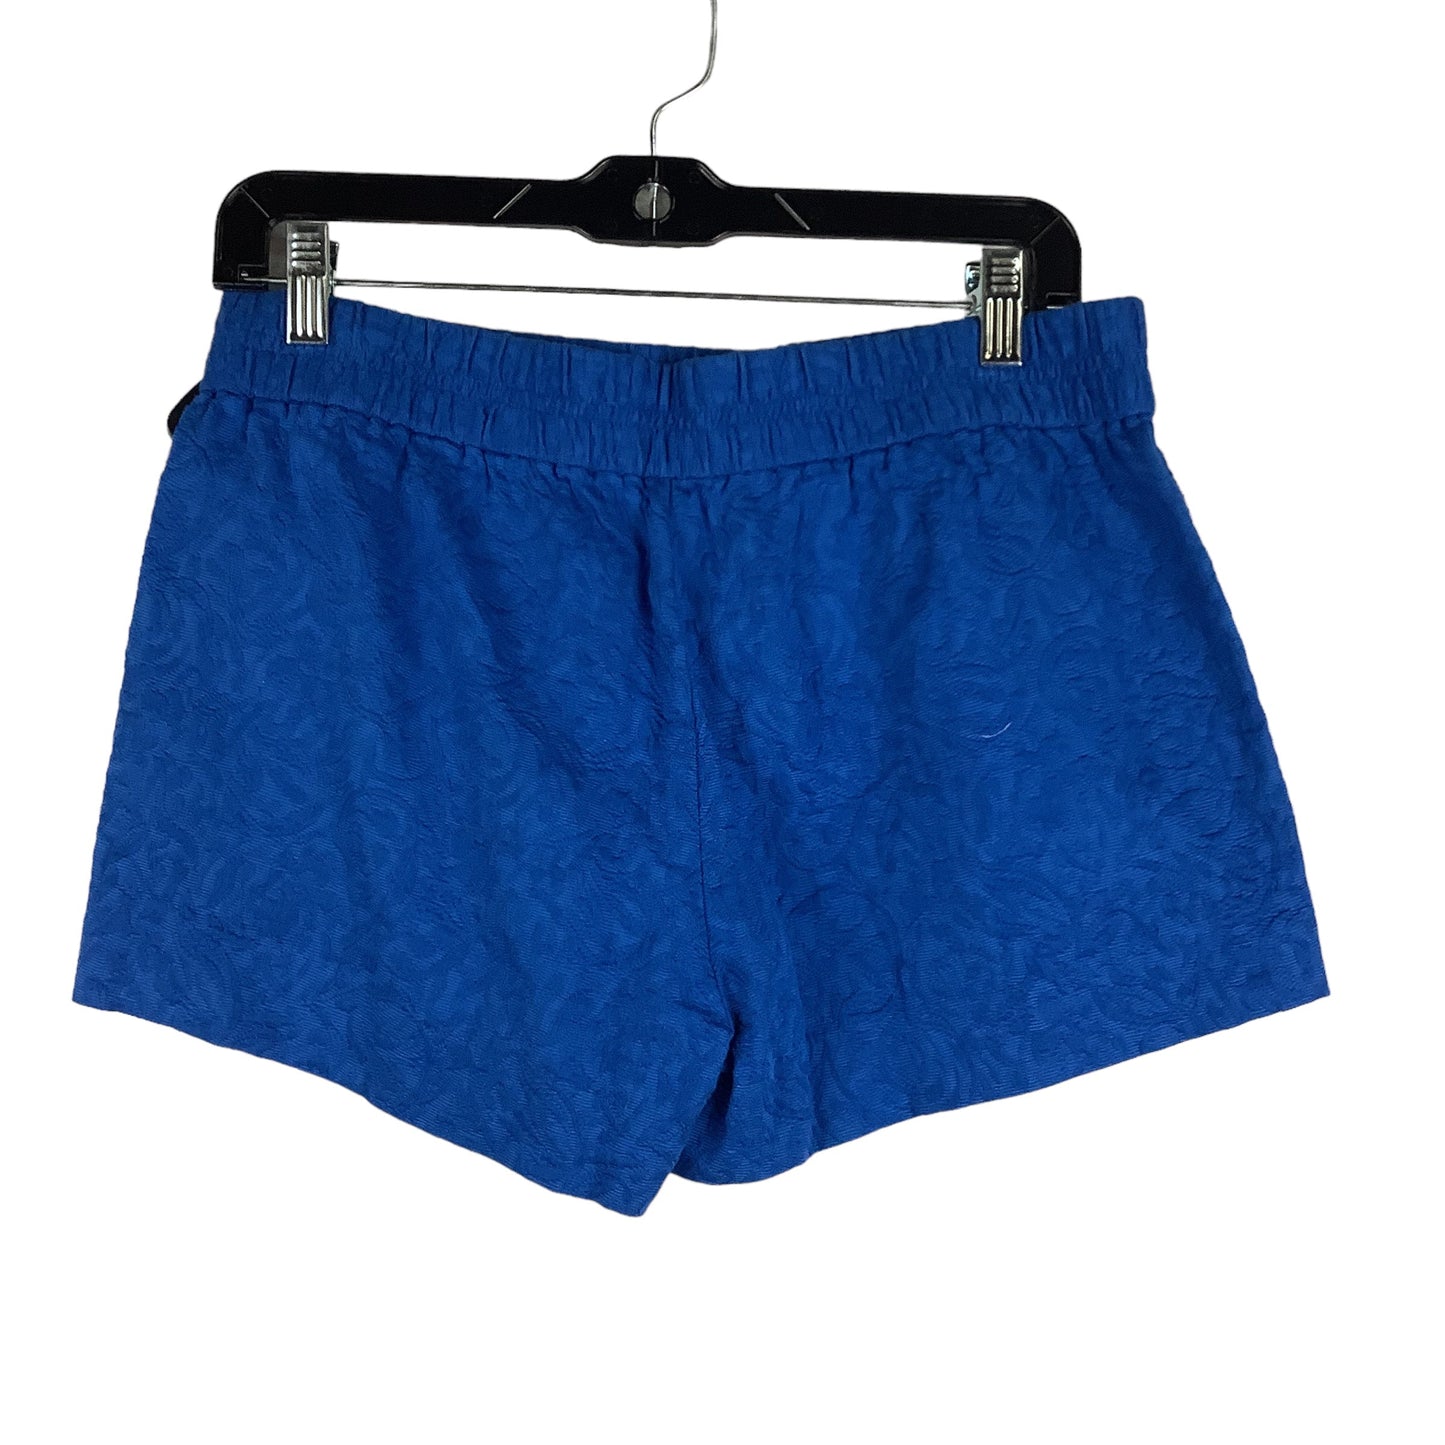 Blue Shorts J. Crew, Size 6